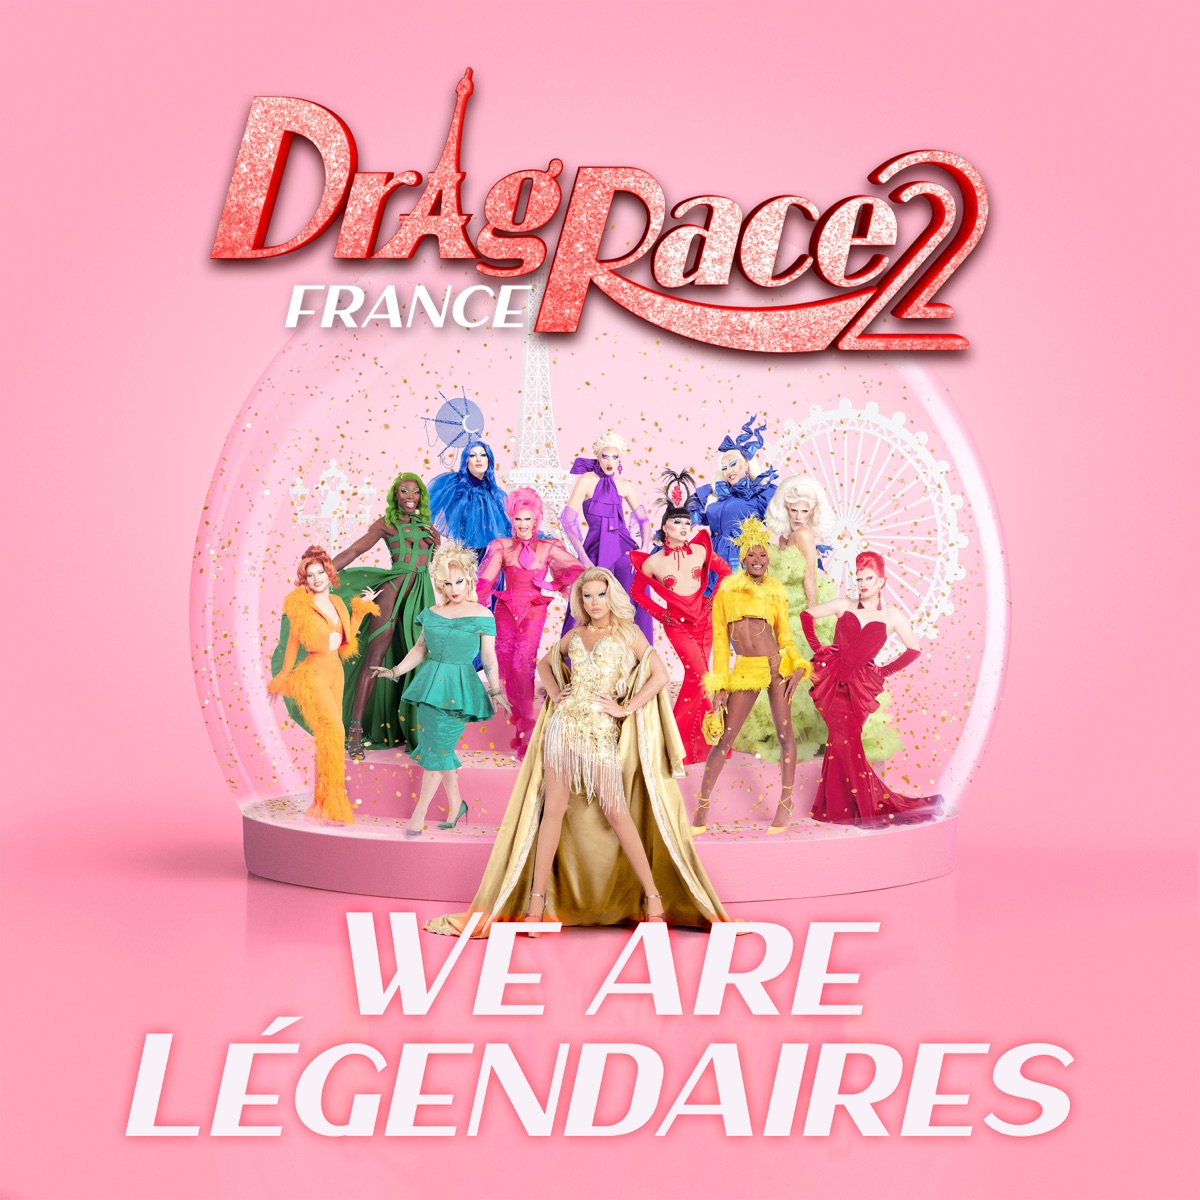 The Cast of Drag Race France — We Are Légendaires cover artwork